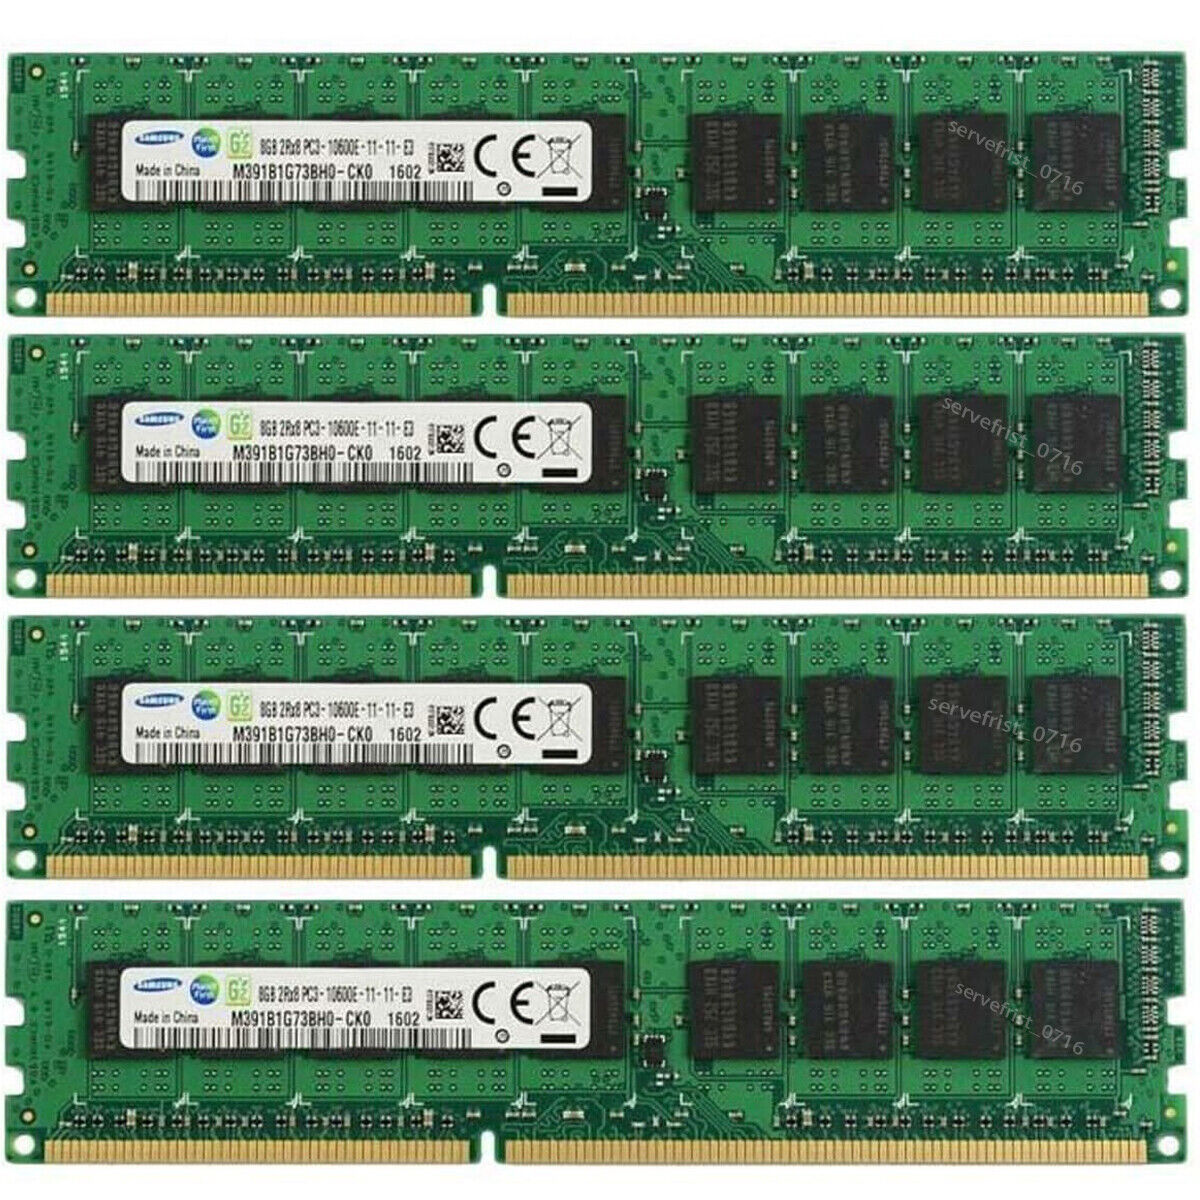 32GB 4x8GB PC3-10600E DDR3-1333 ECC Unbuffered UDIMM 1.5V Memory for HP Z220 SFF